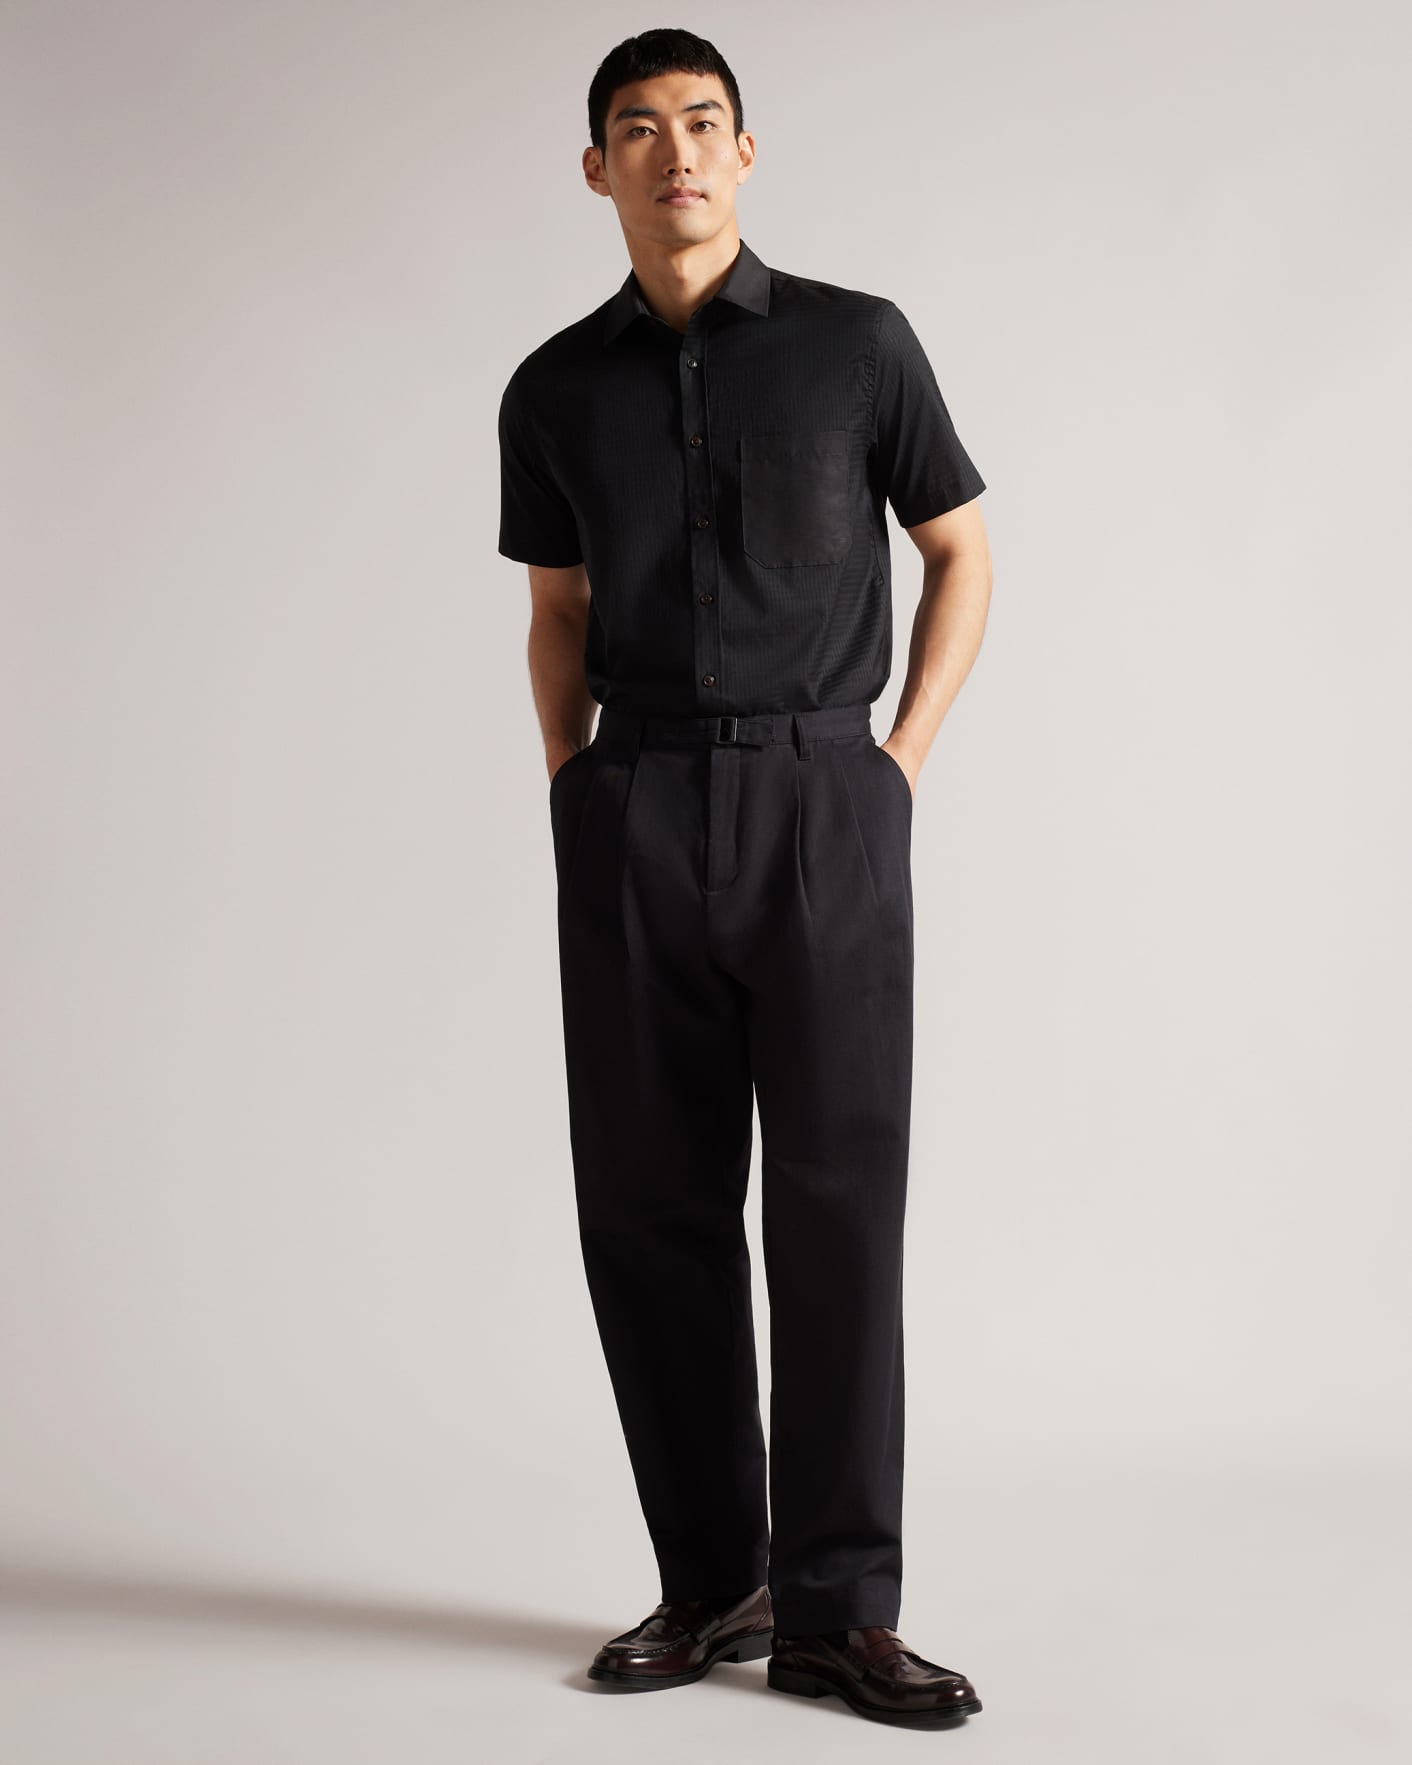 Black Short Sleeve Contrast Texture Shirt Ted Baker